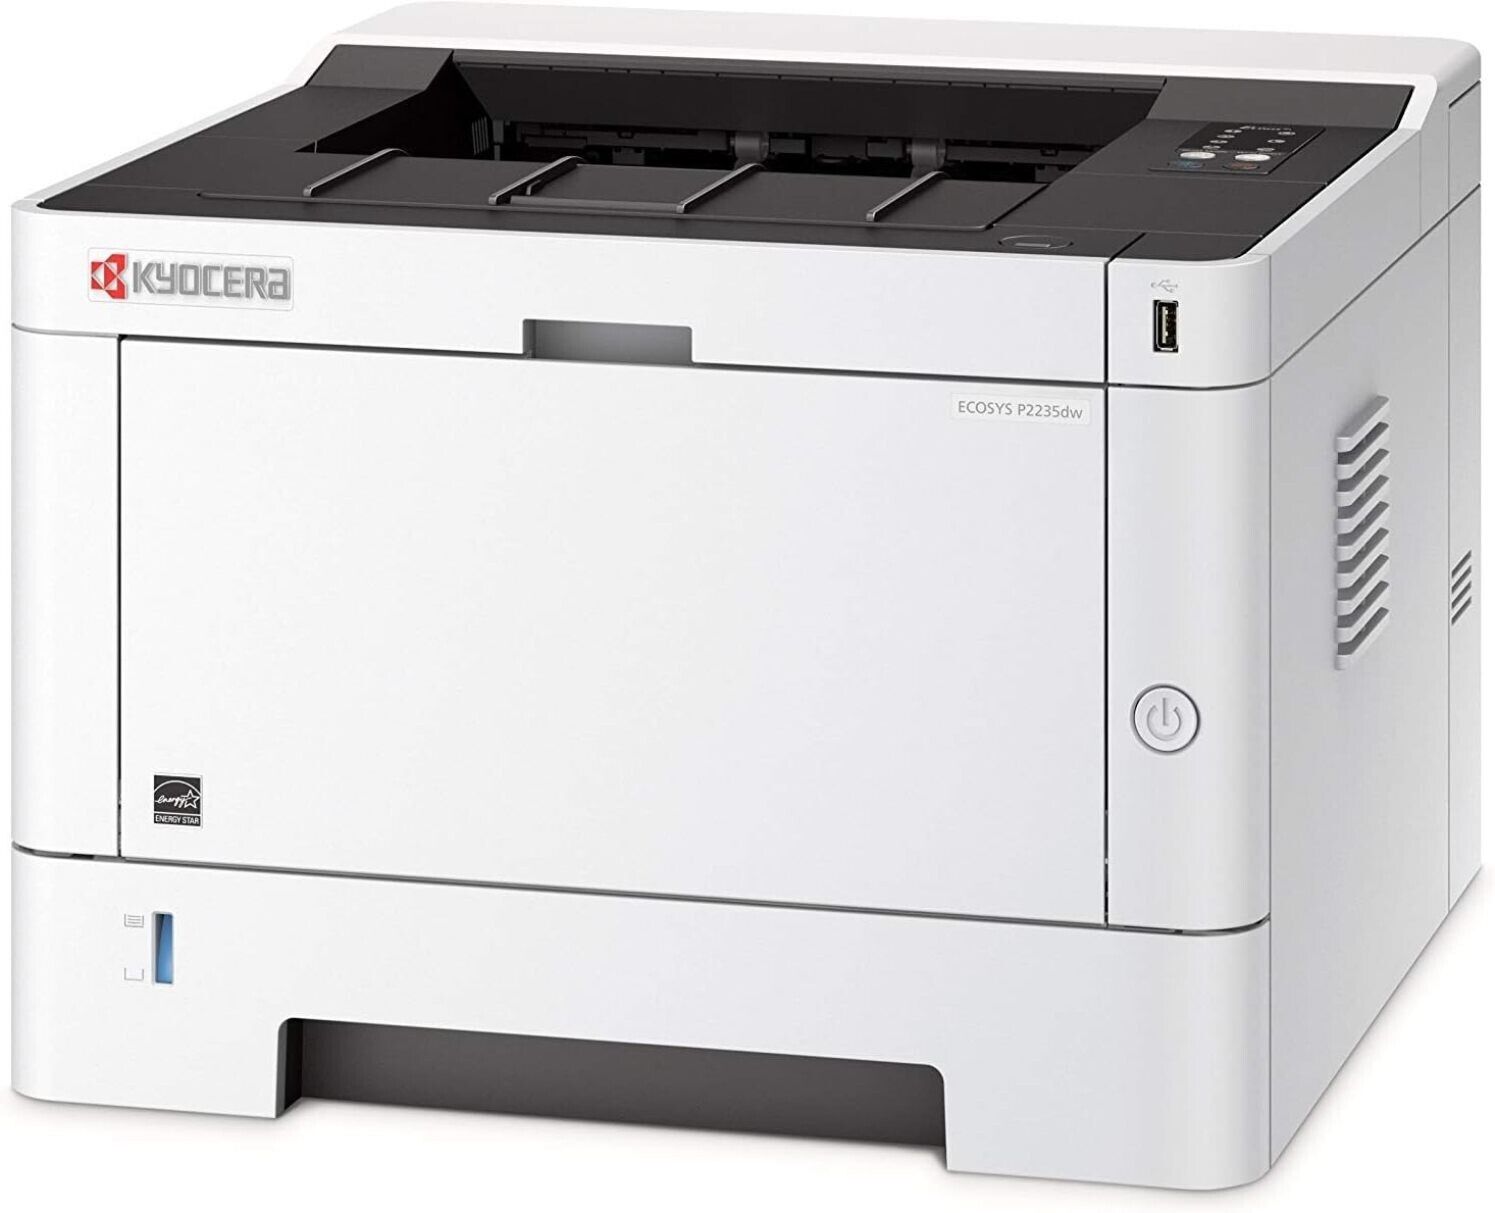 Kyocera 1102RW2US0 Model ECOSYS P2235dw Black and White Network Printer